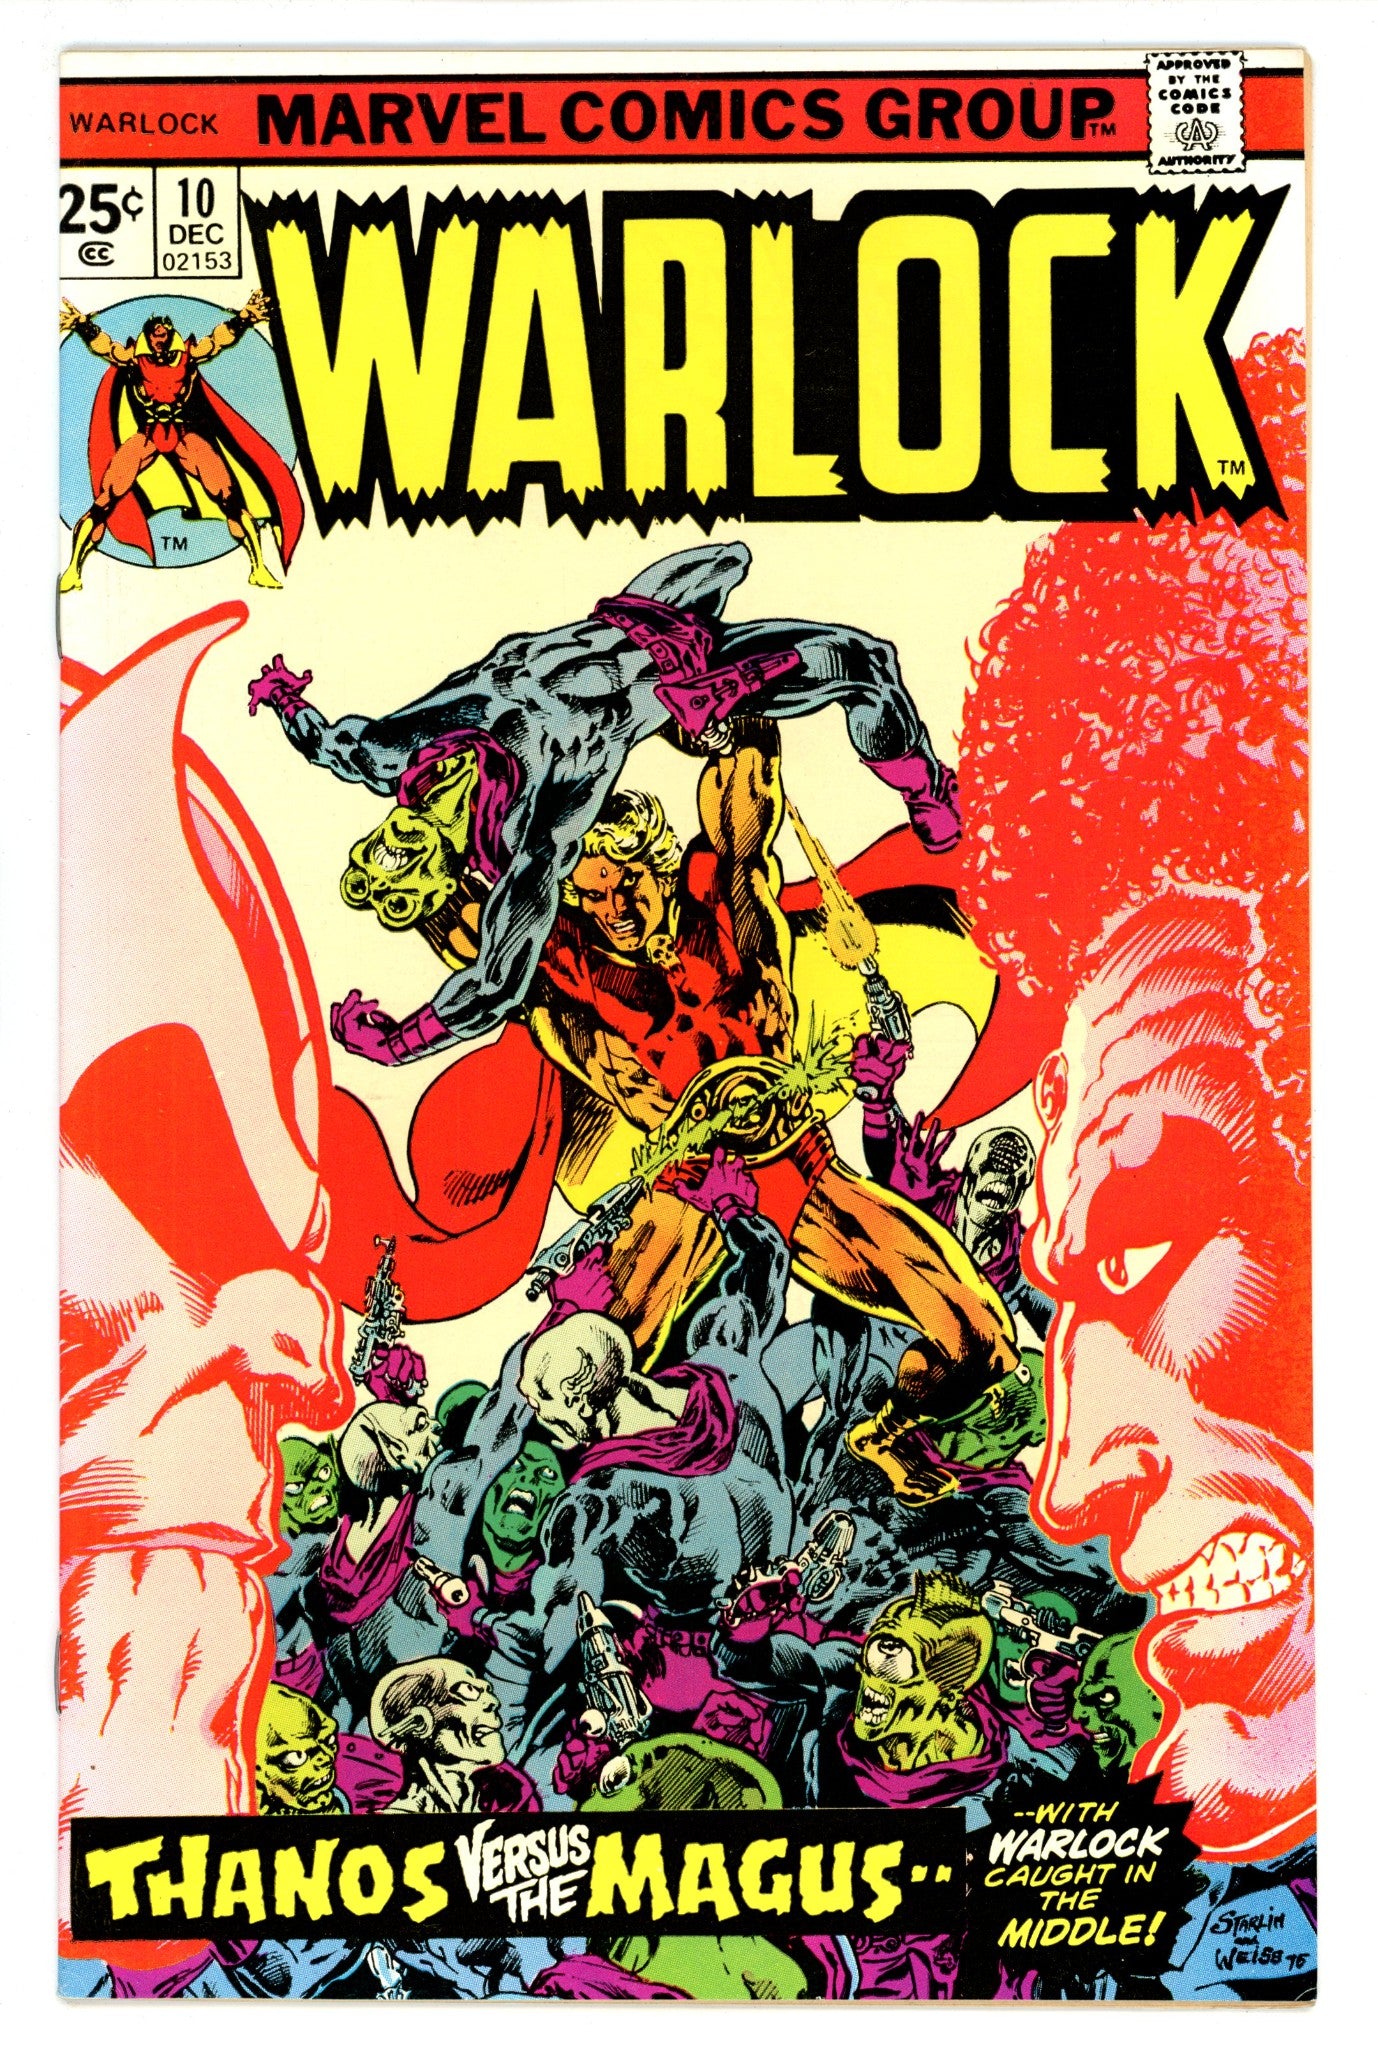 Warlock Vol 1 10 VF (8.0) (1975) 